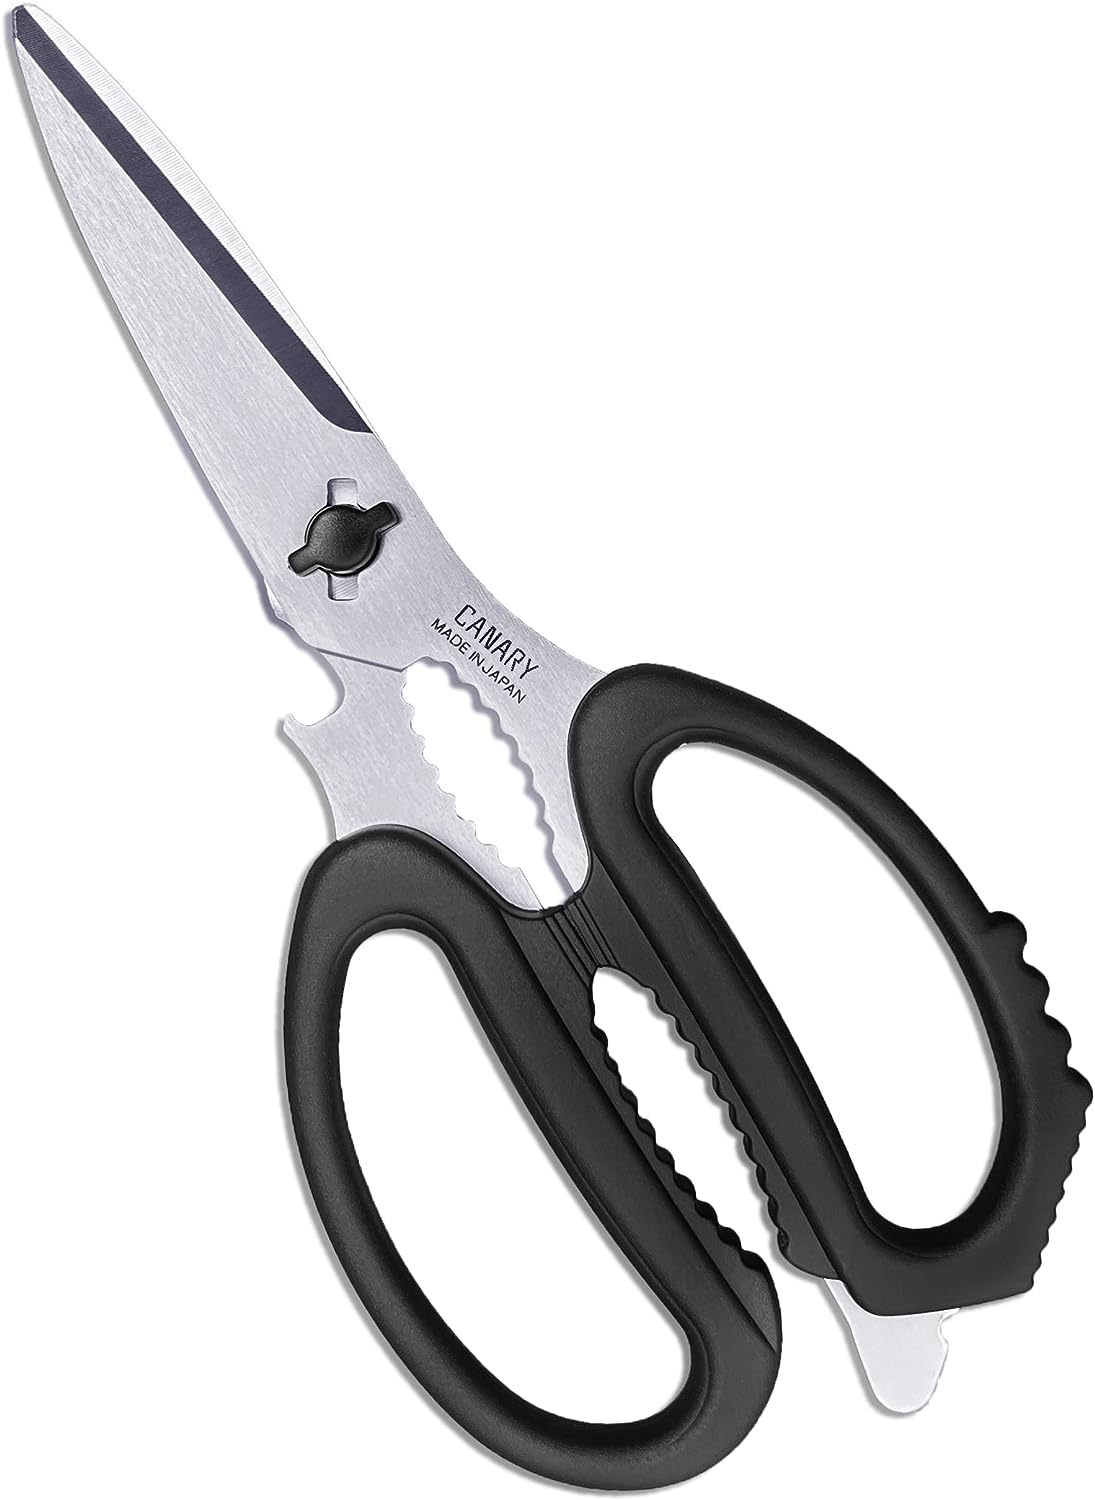 TONMA Multi-Purpose Scissors [Made in Japan] Sharp 9.5 Office Scissors  with